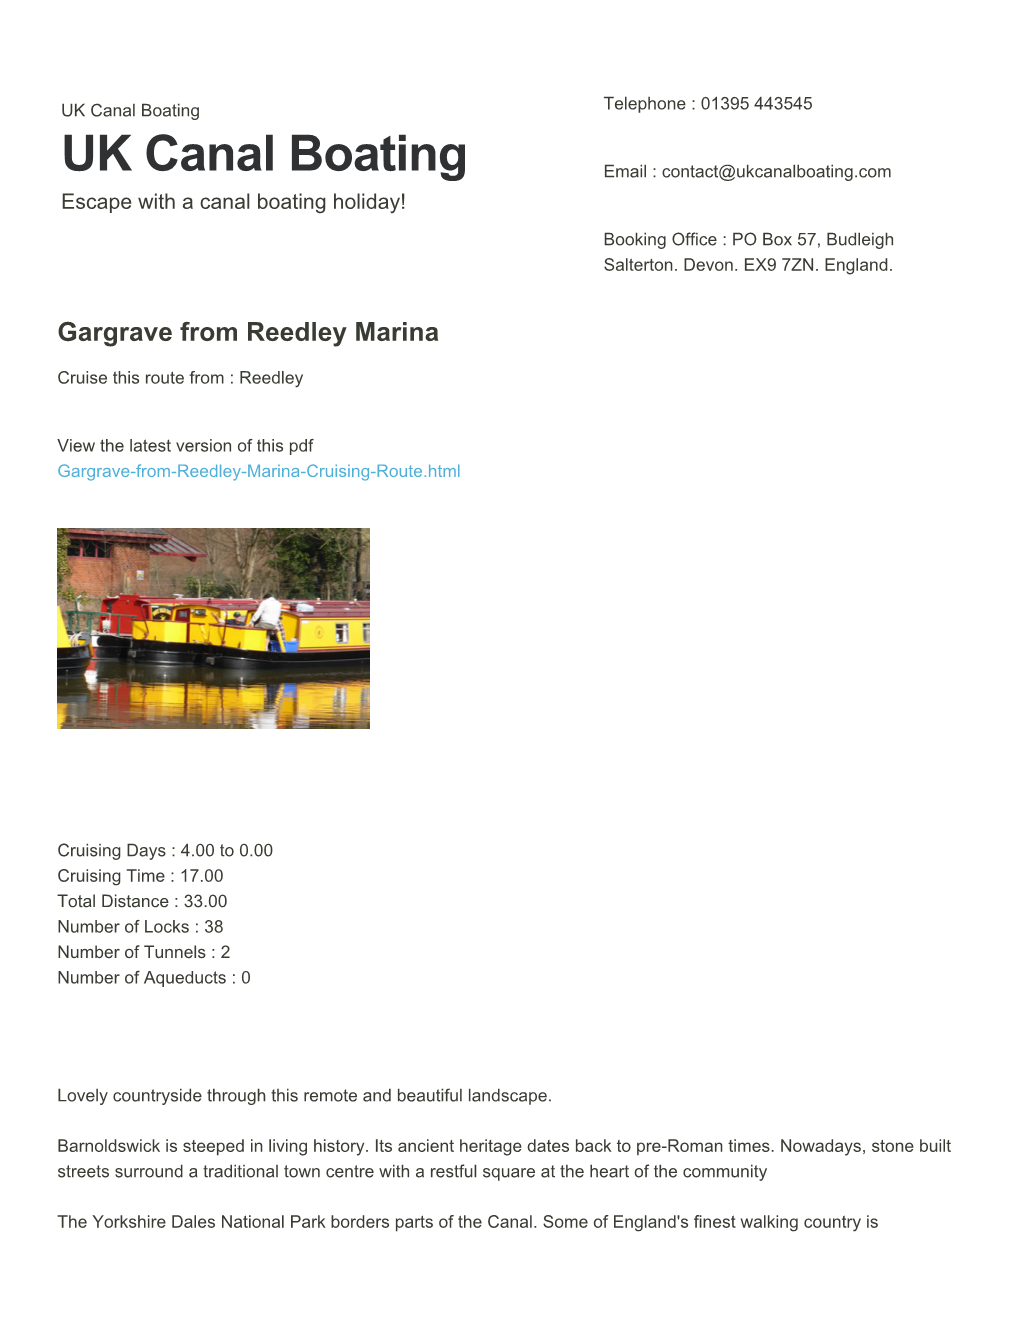 Gargrave from Reedley Marina | UK Canal Boating